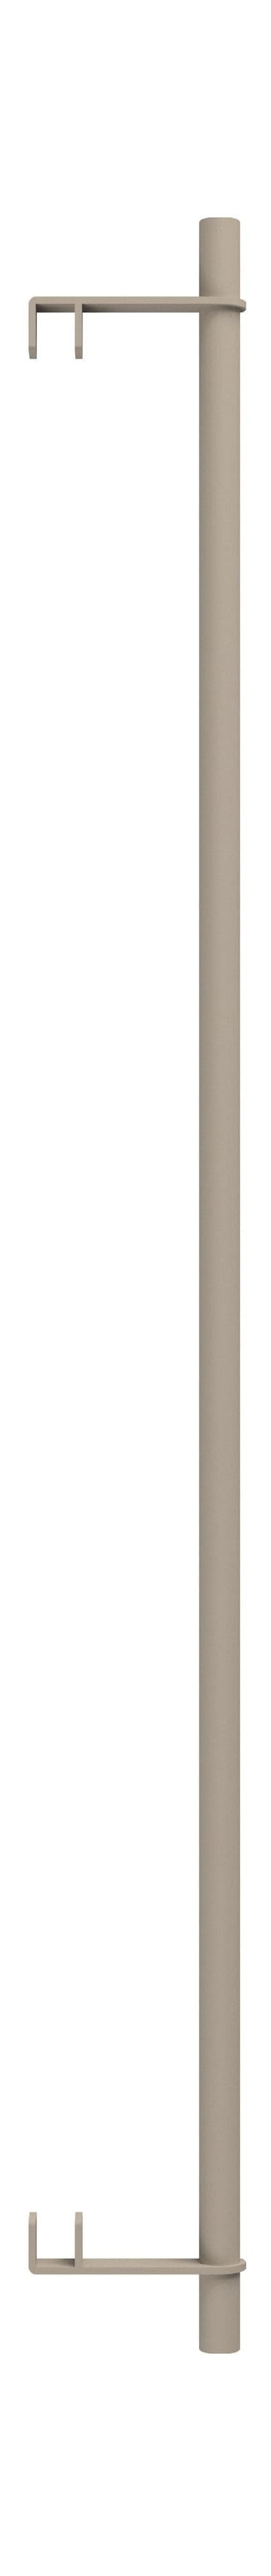 Moebe -Regalsystem/Wandregal Kleidung Bar 85 cm, warmes Grau